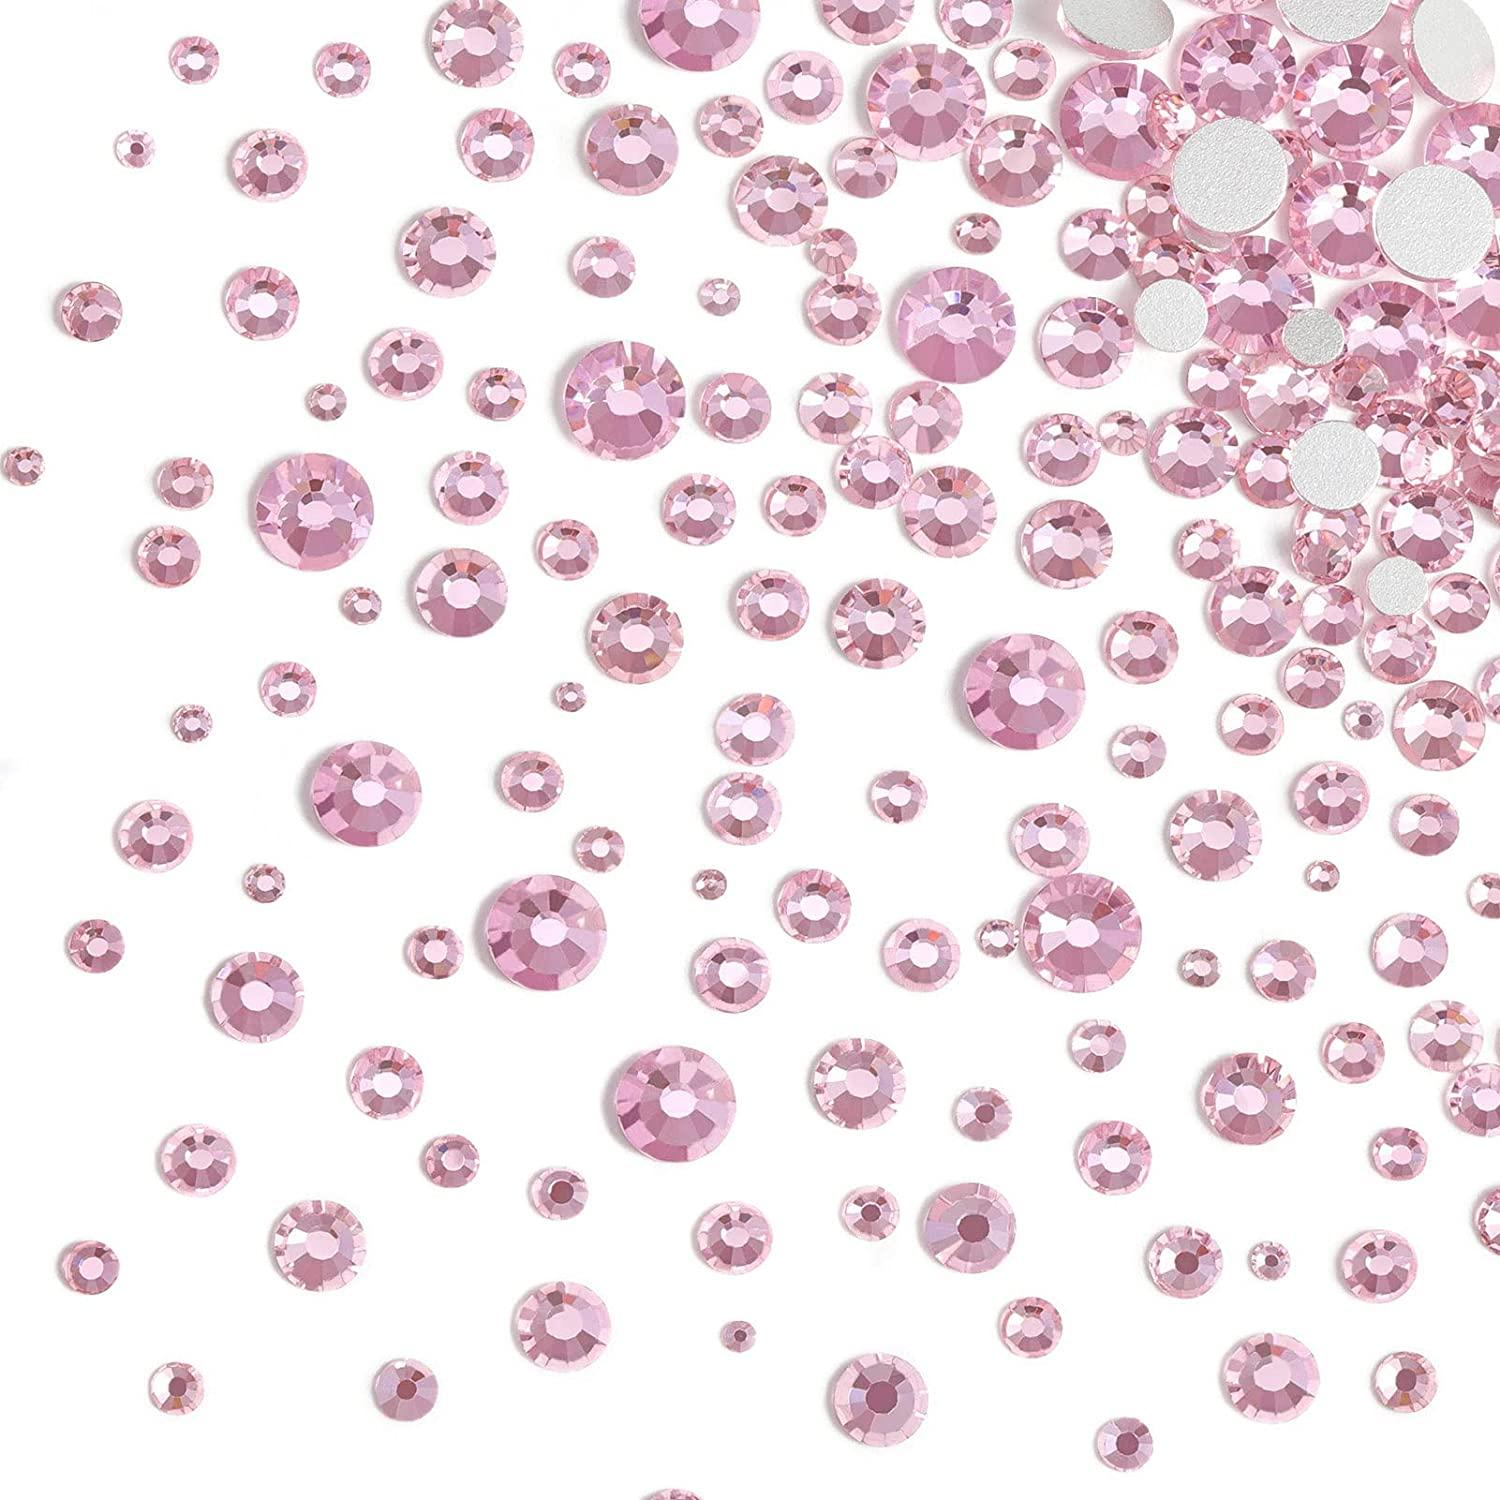  Beadsland Hotfix Rhinestones, 2880pcs Flatback Crystal  Rhinestones for Crafts Clothes DIY Decorations, Light Pink, SS10, 2.7-2.9mm